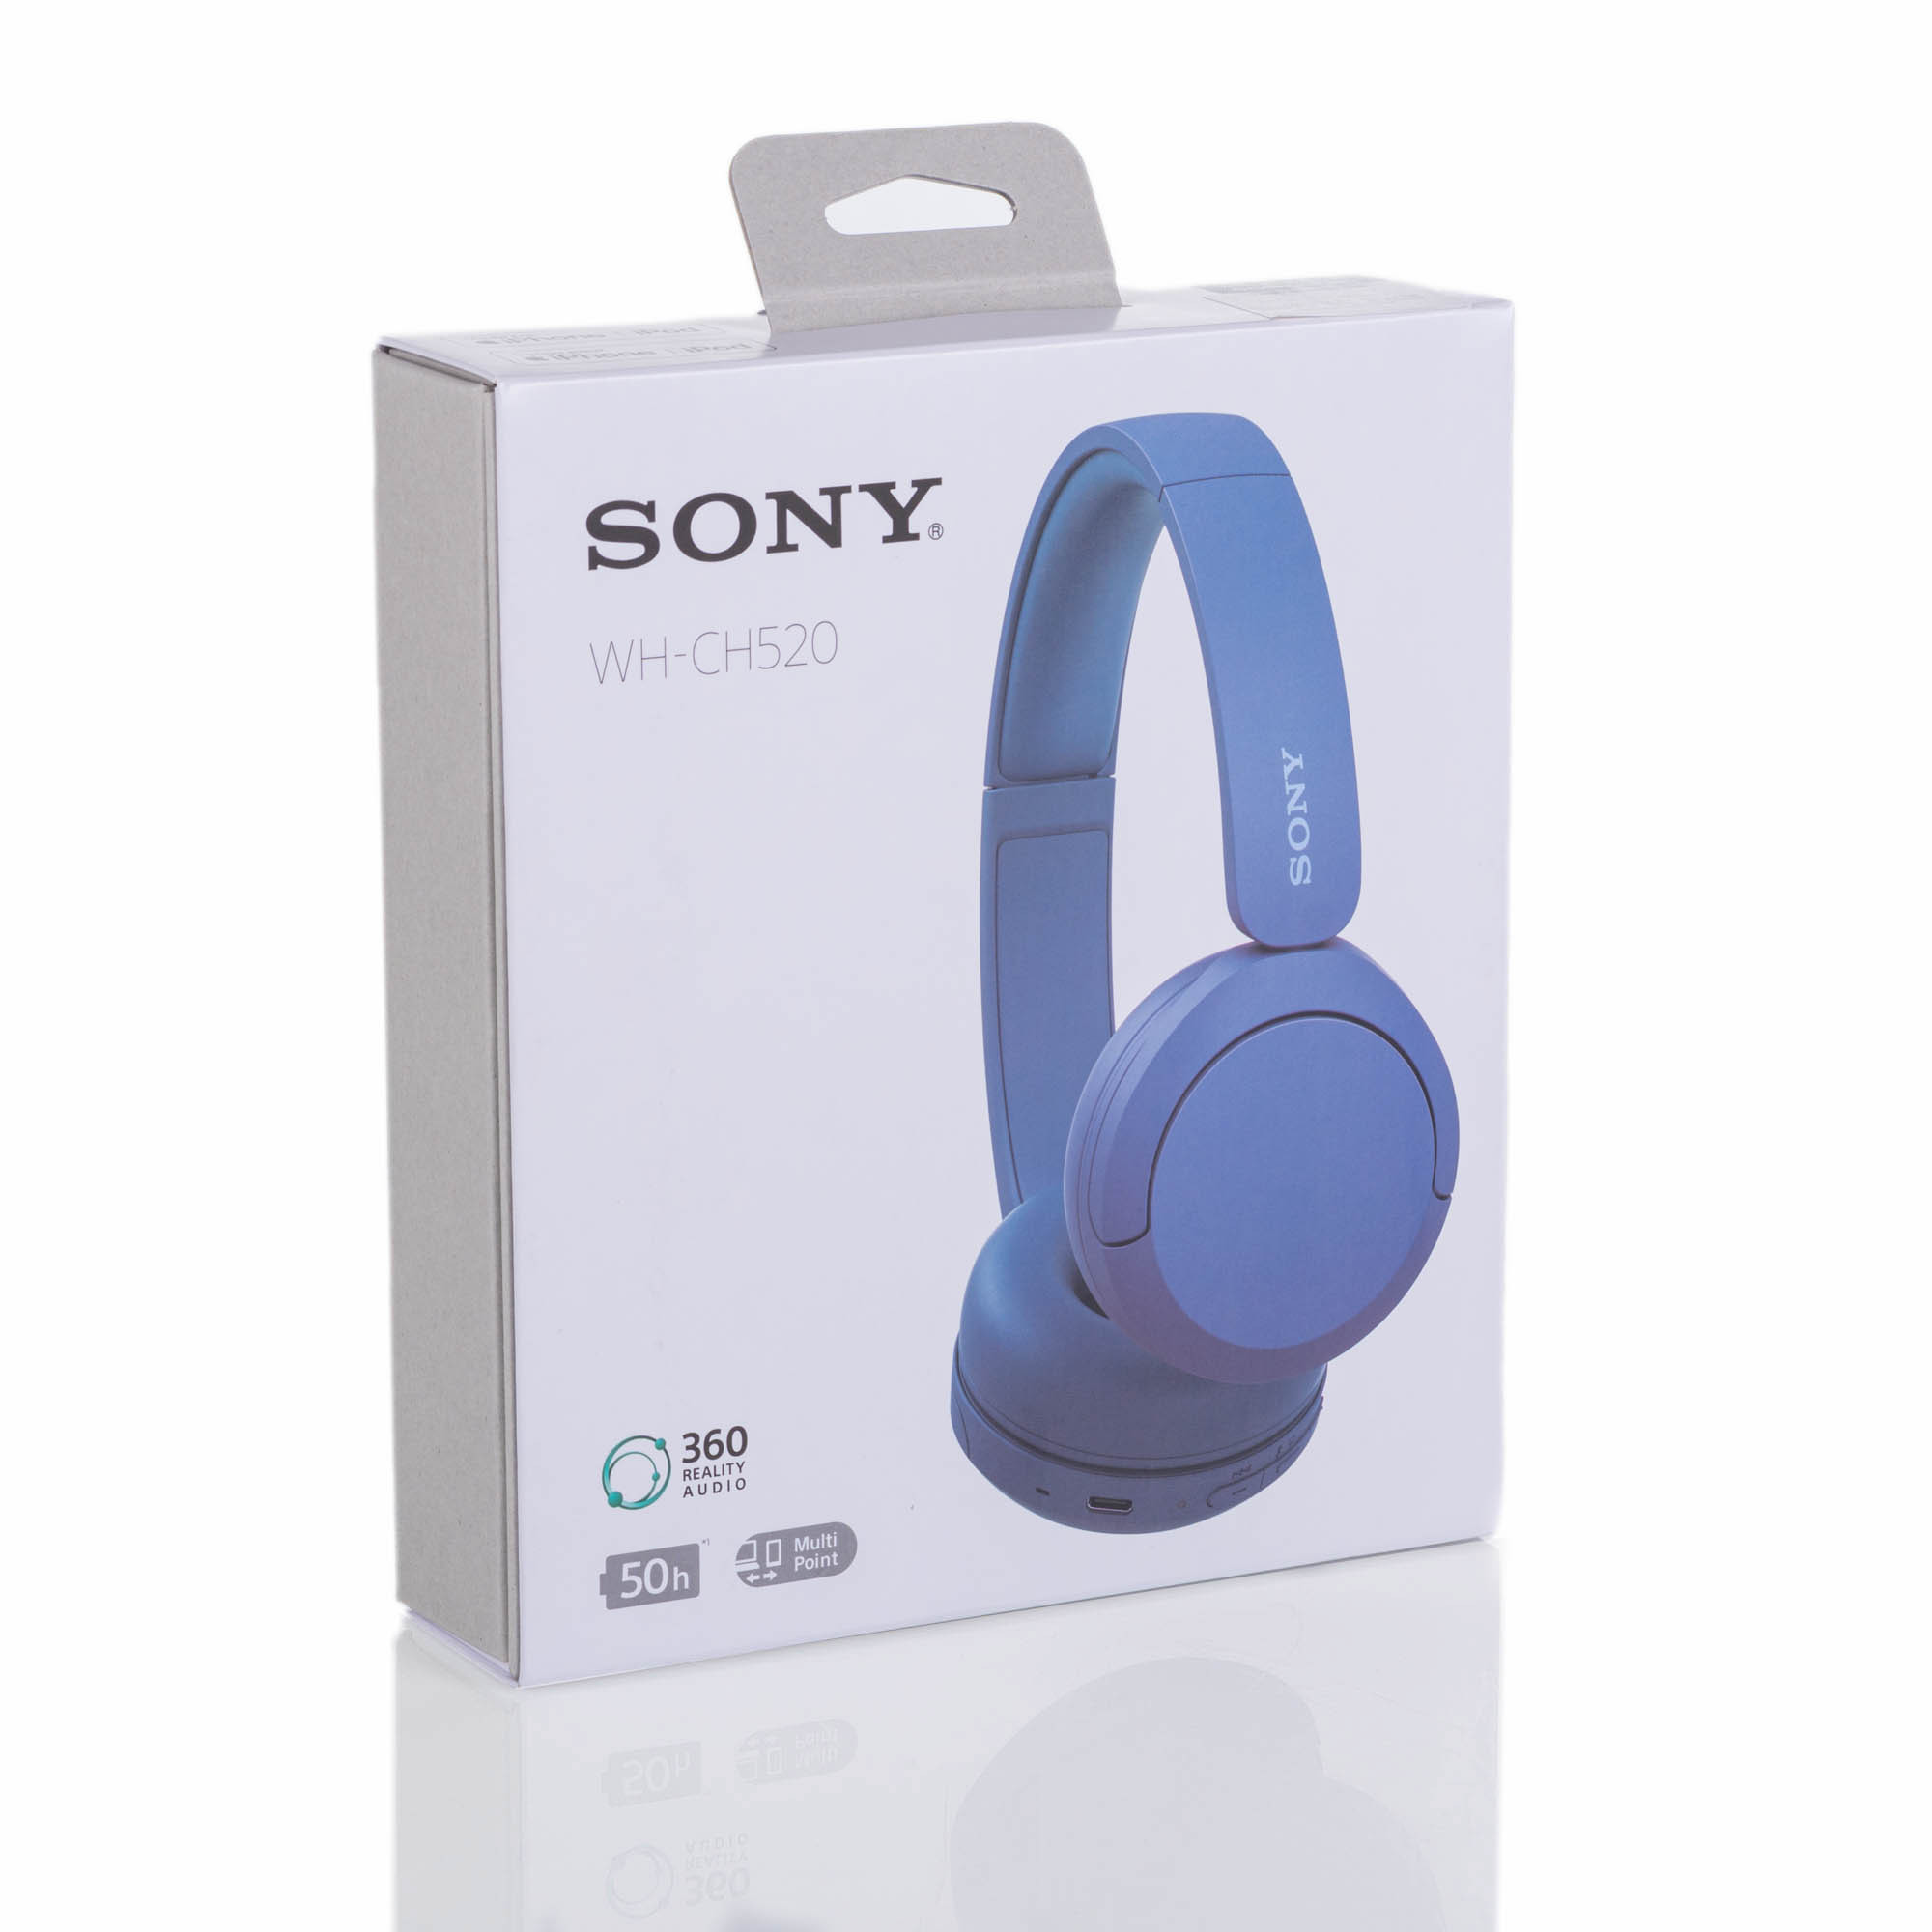 Comprar Auriculares de diadema inalámbricos Sony WH-CH520